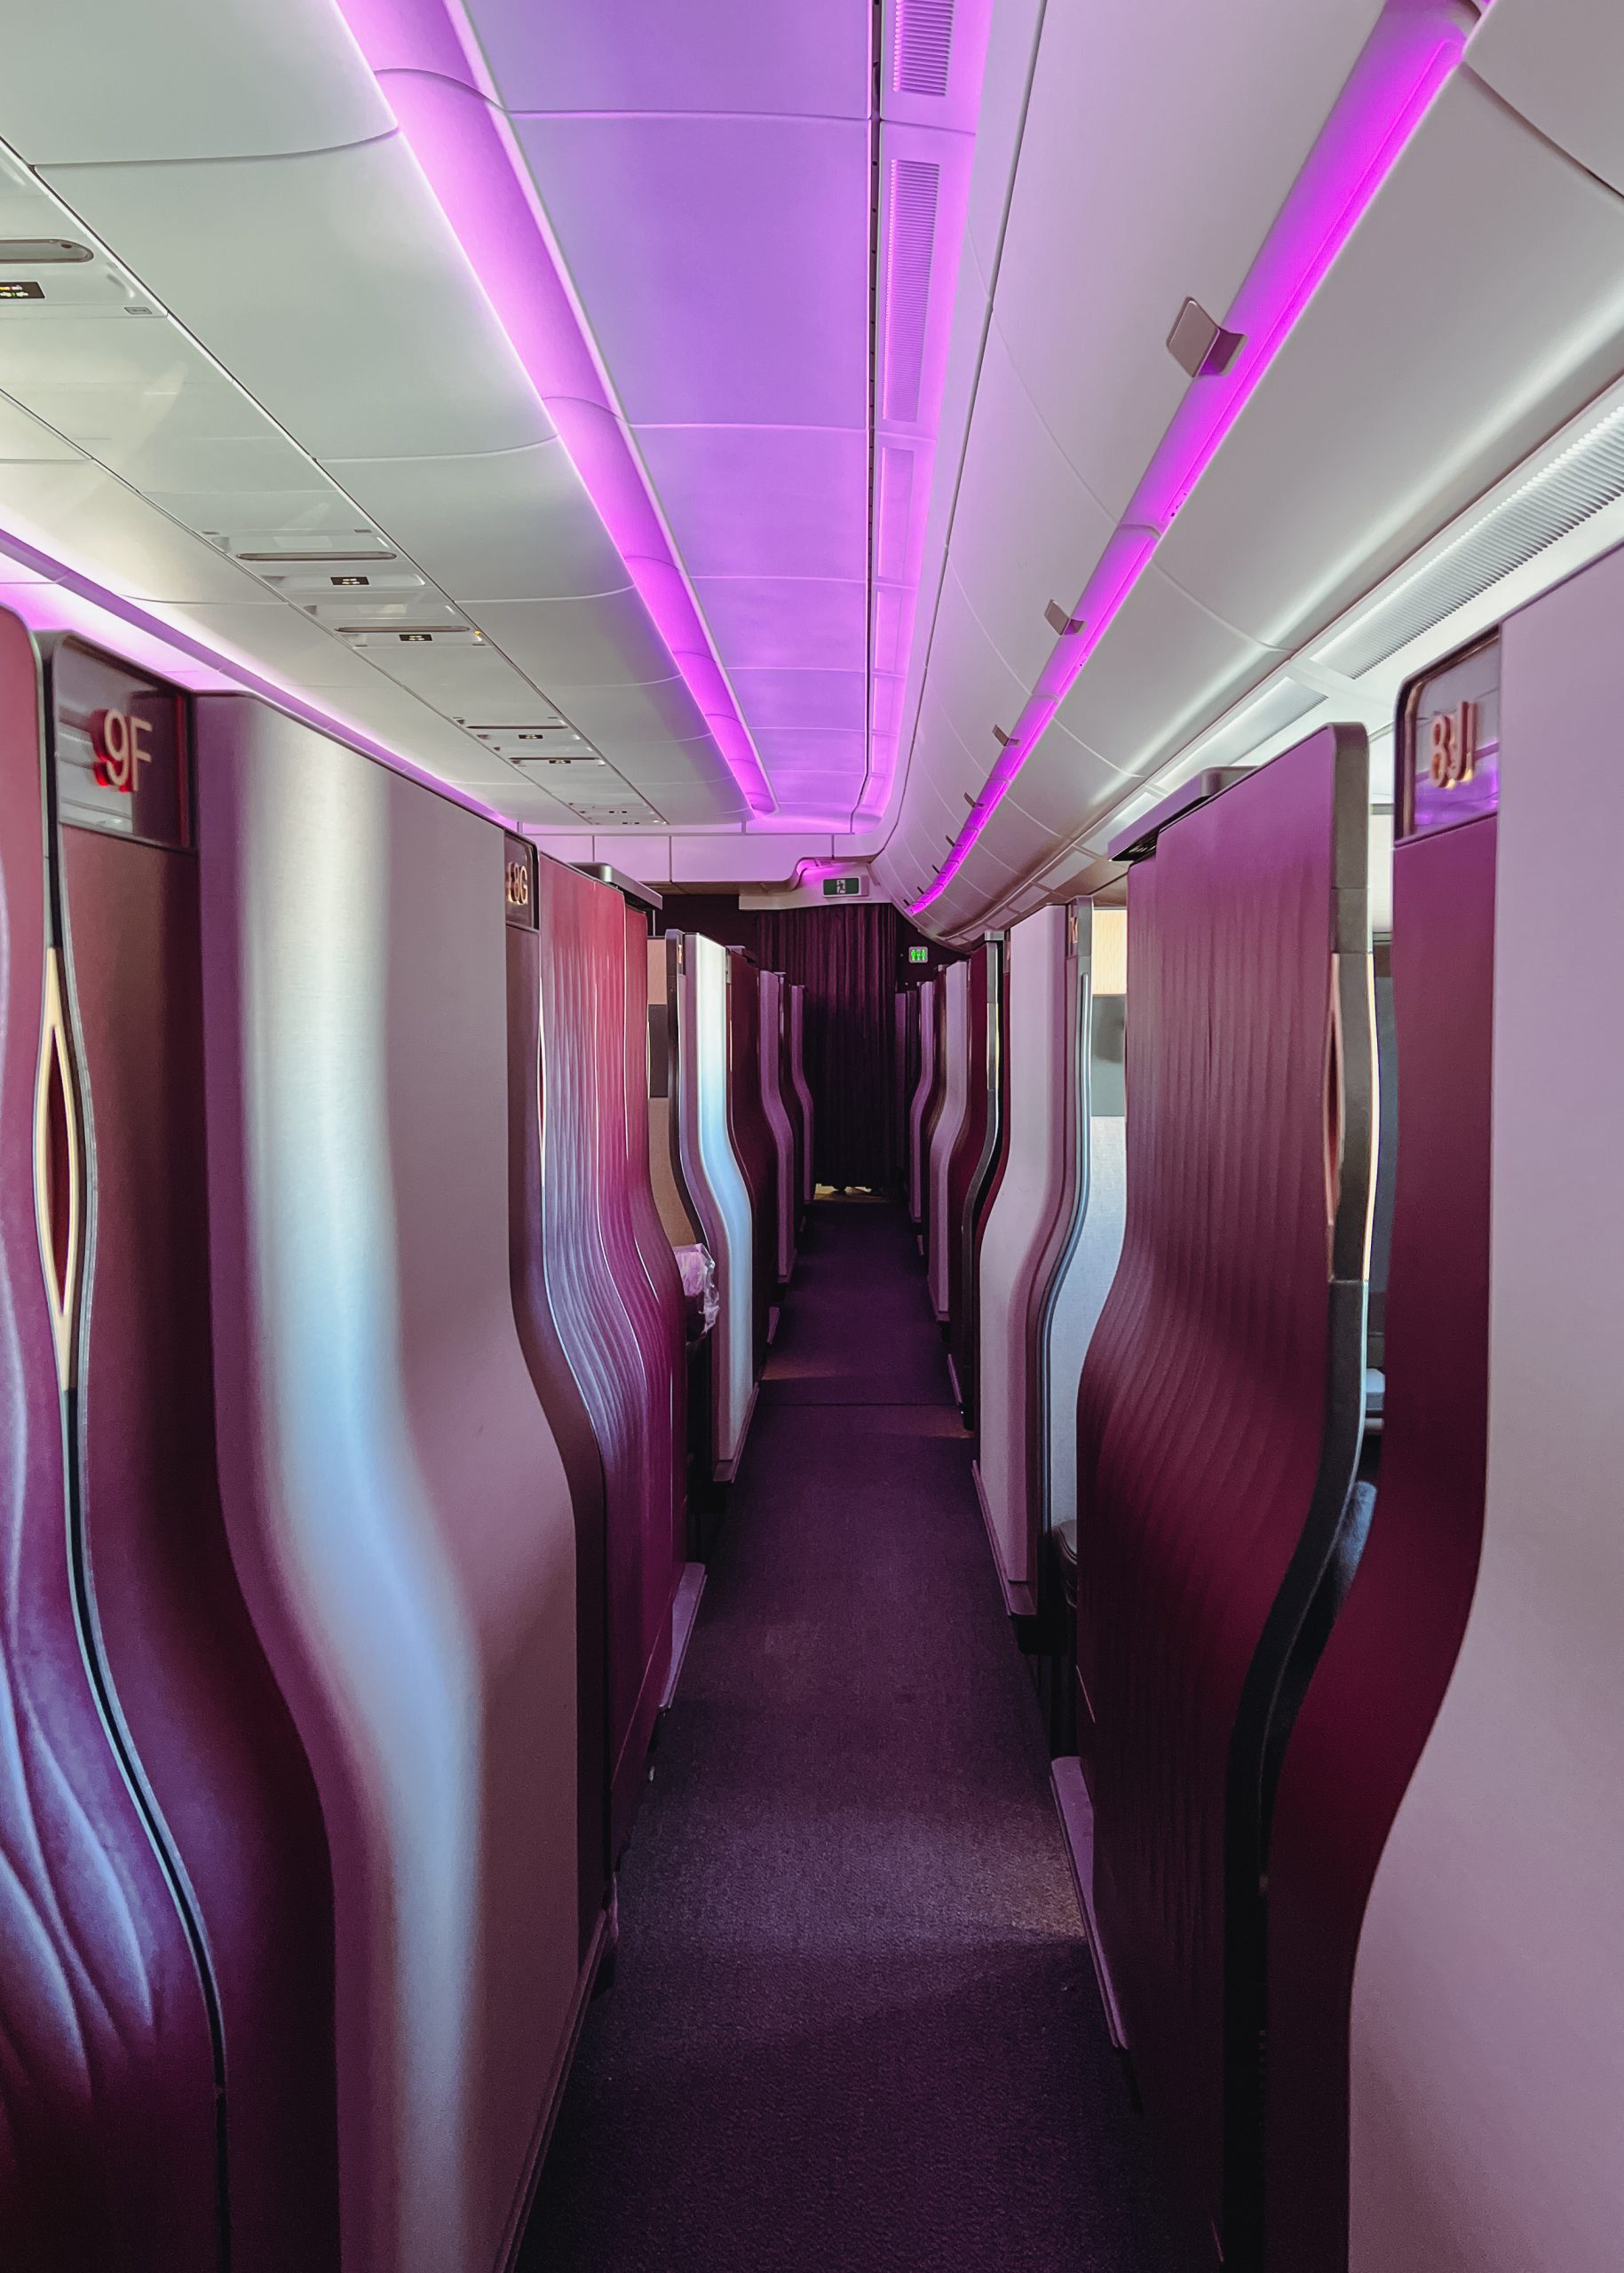 a long hallway with purple seats